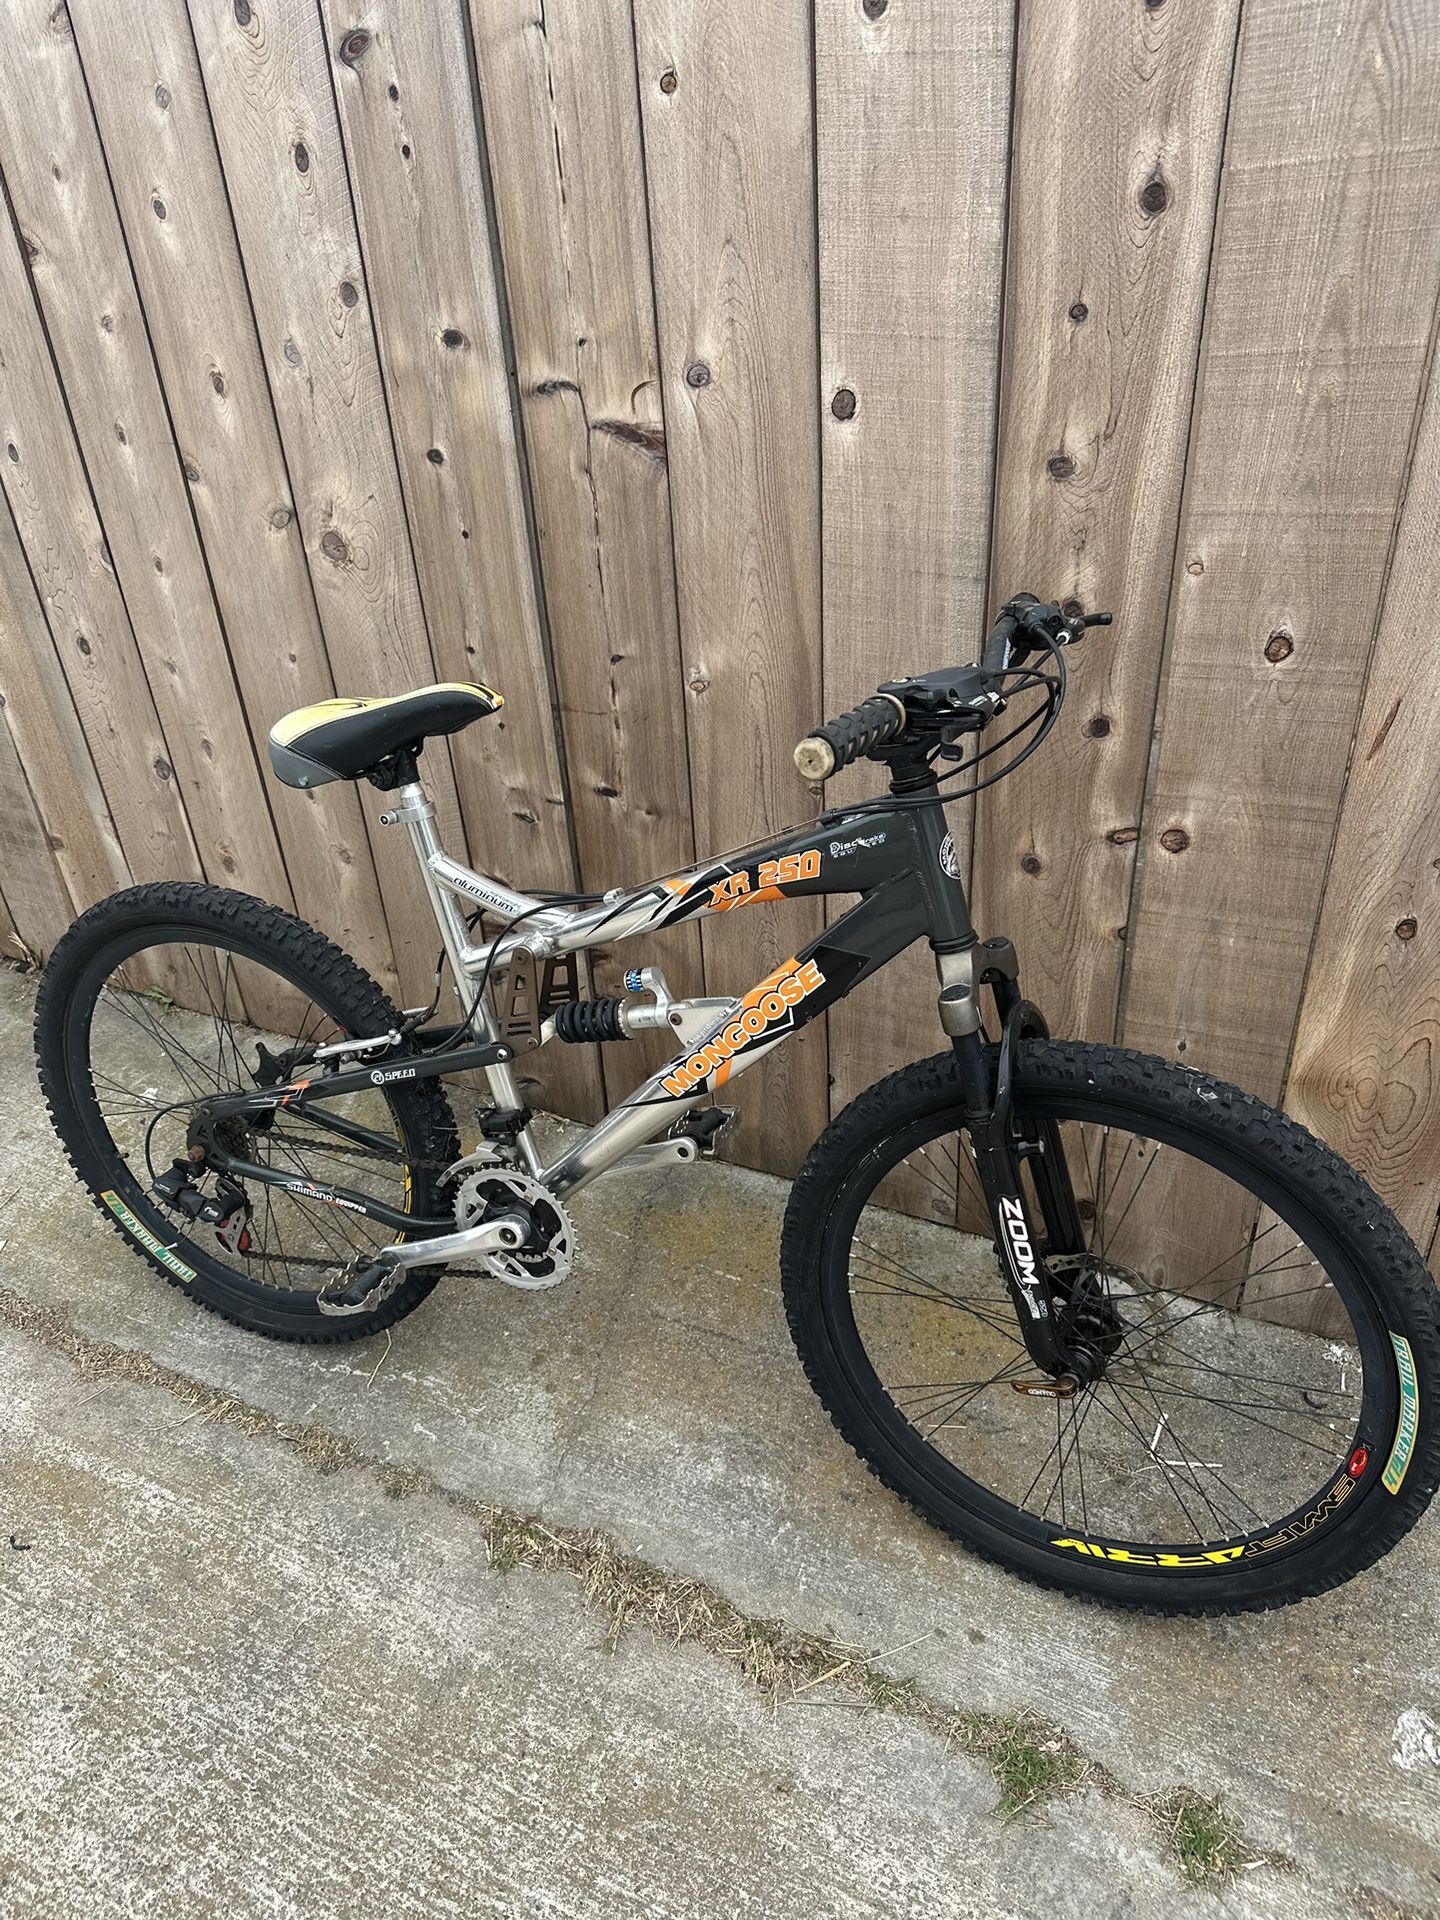 Bike (Mongoose Xr 250)